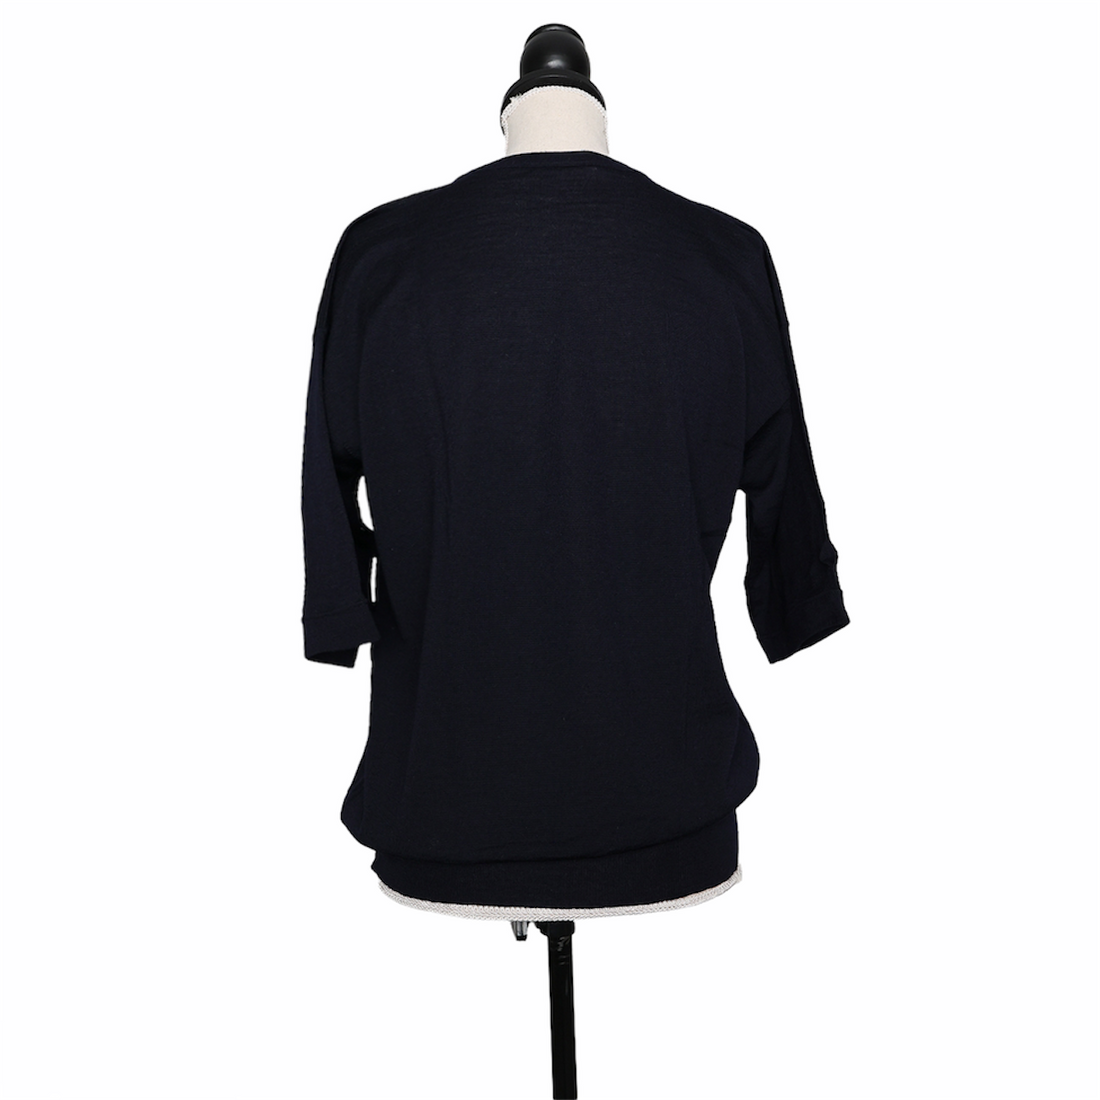 Jil Sander sweater with short sleeves Black